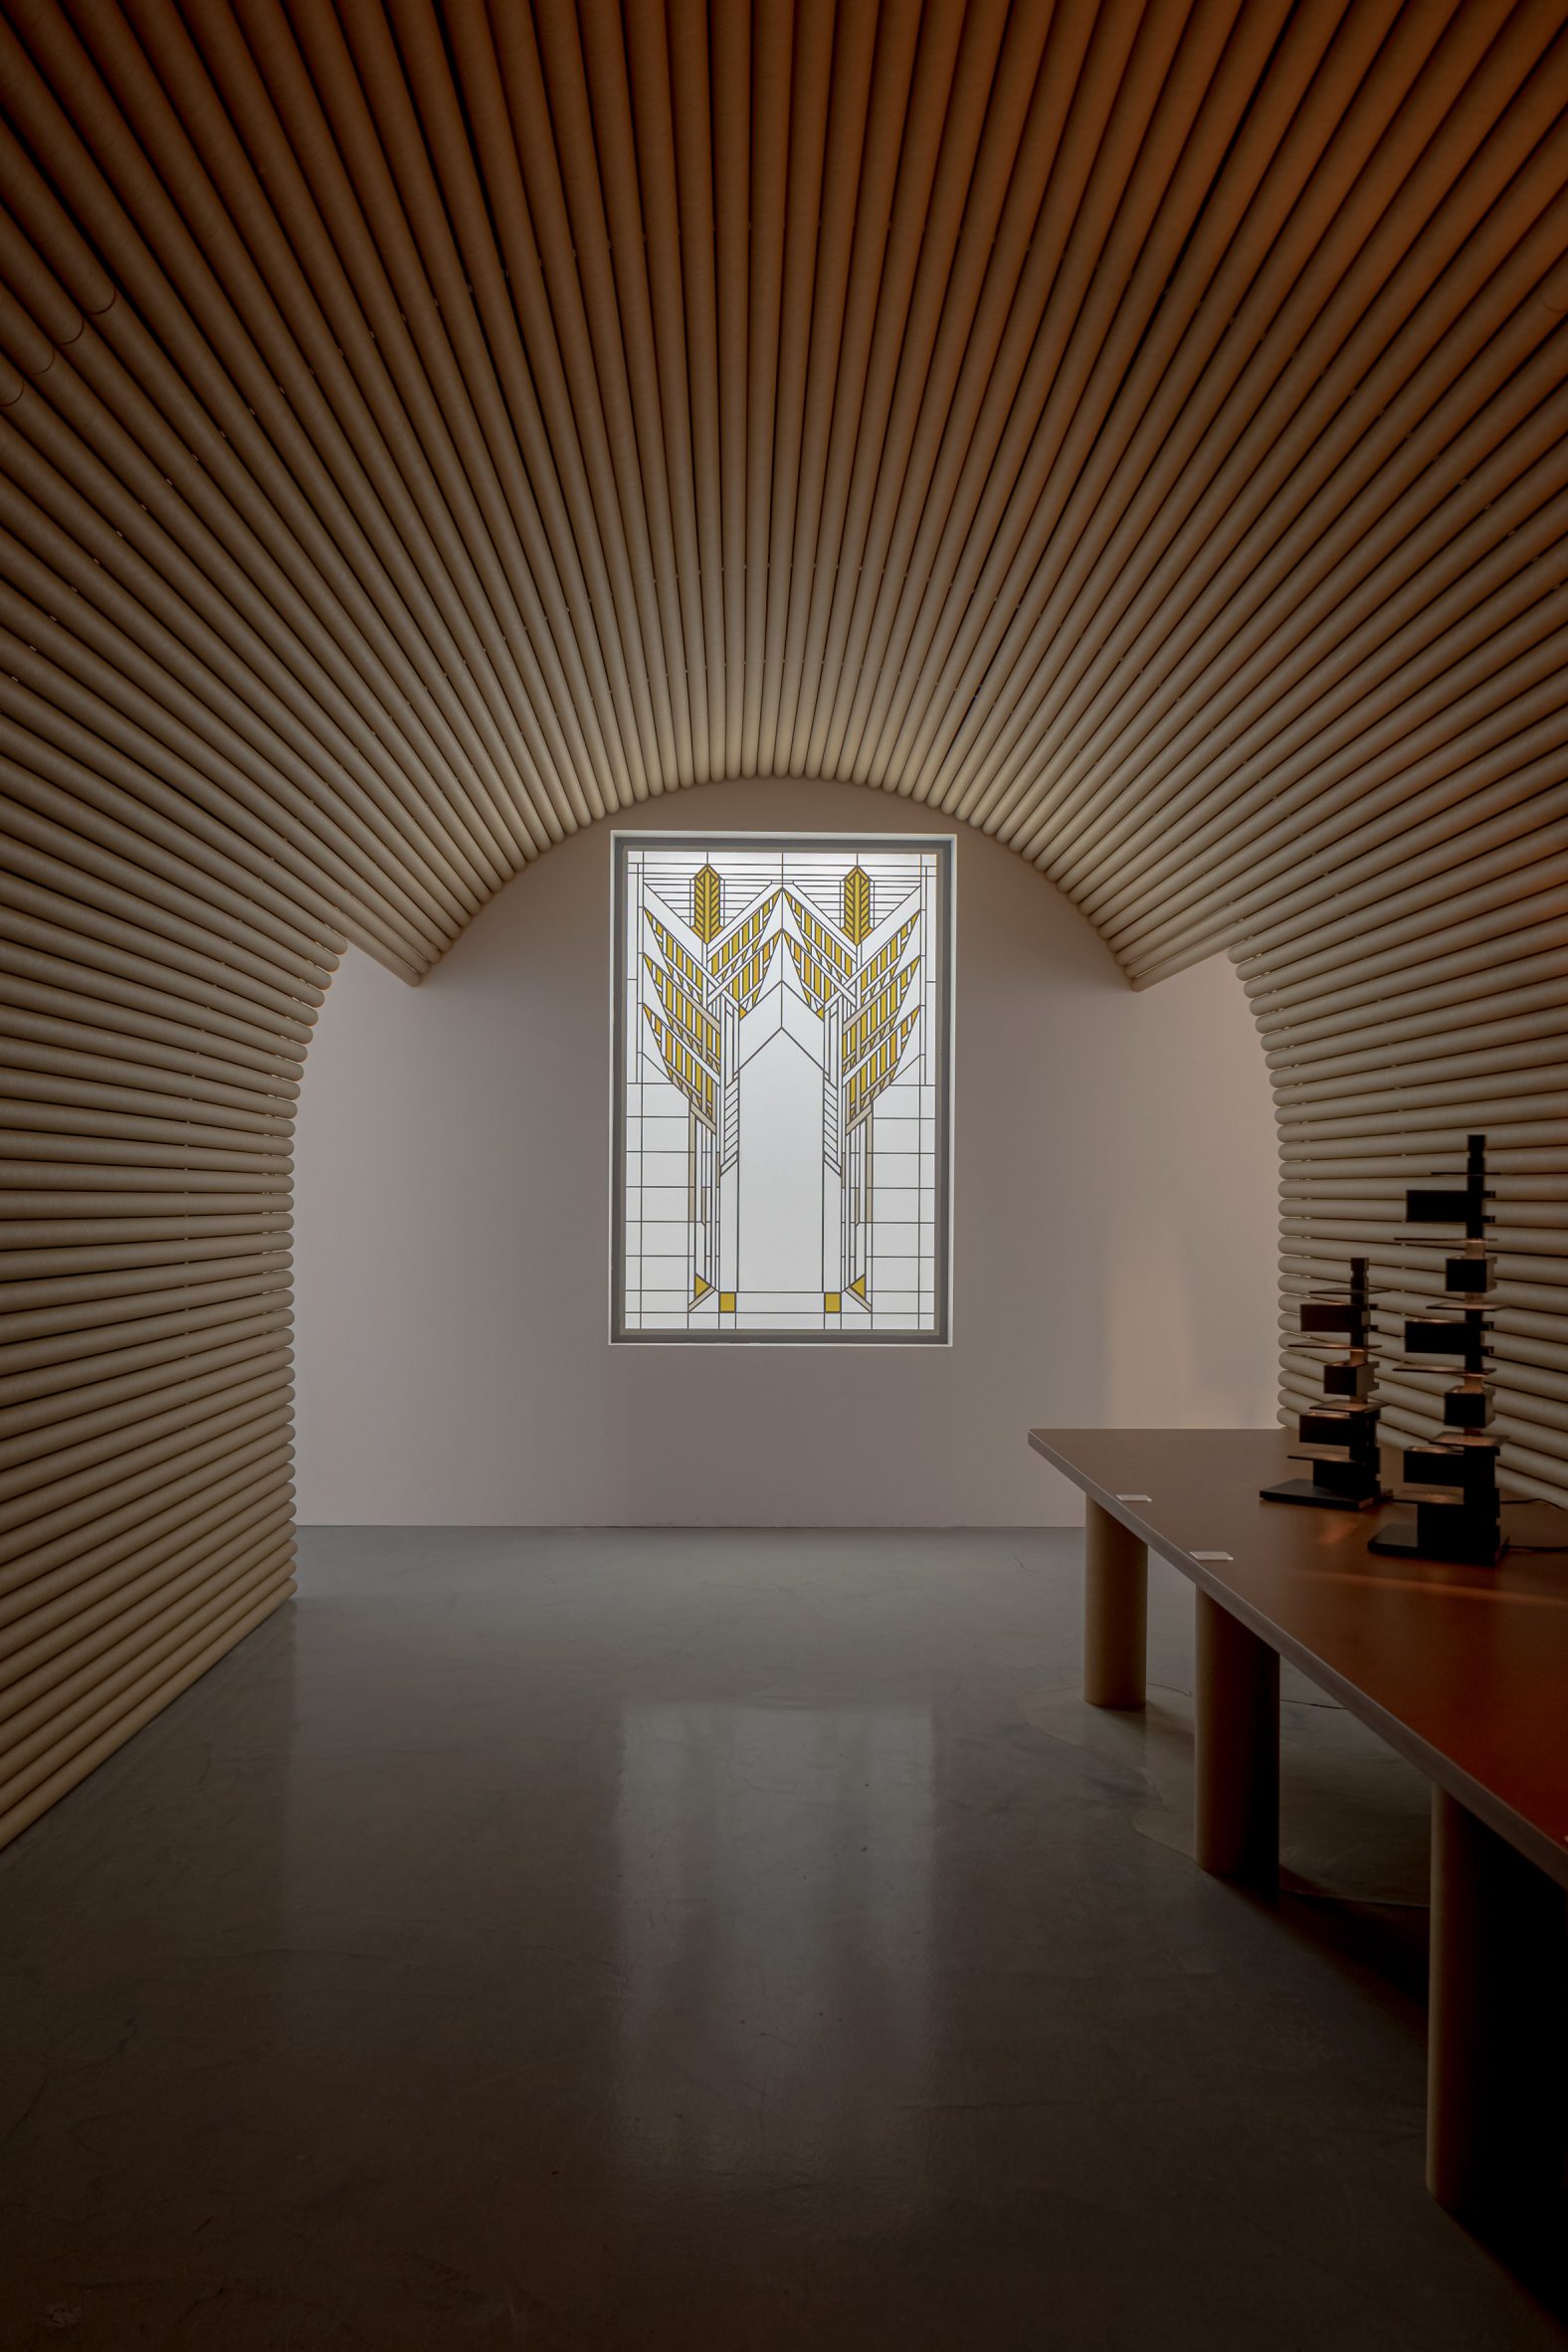 Window with pattern by Frank Lloyd Wright